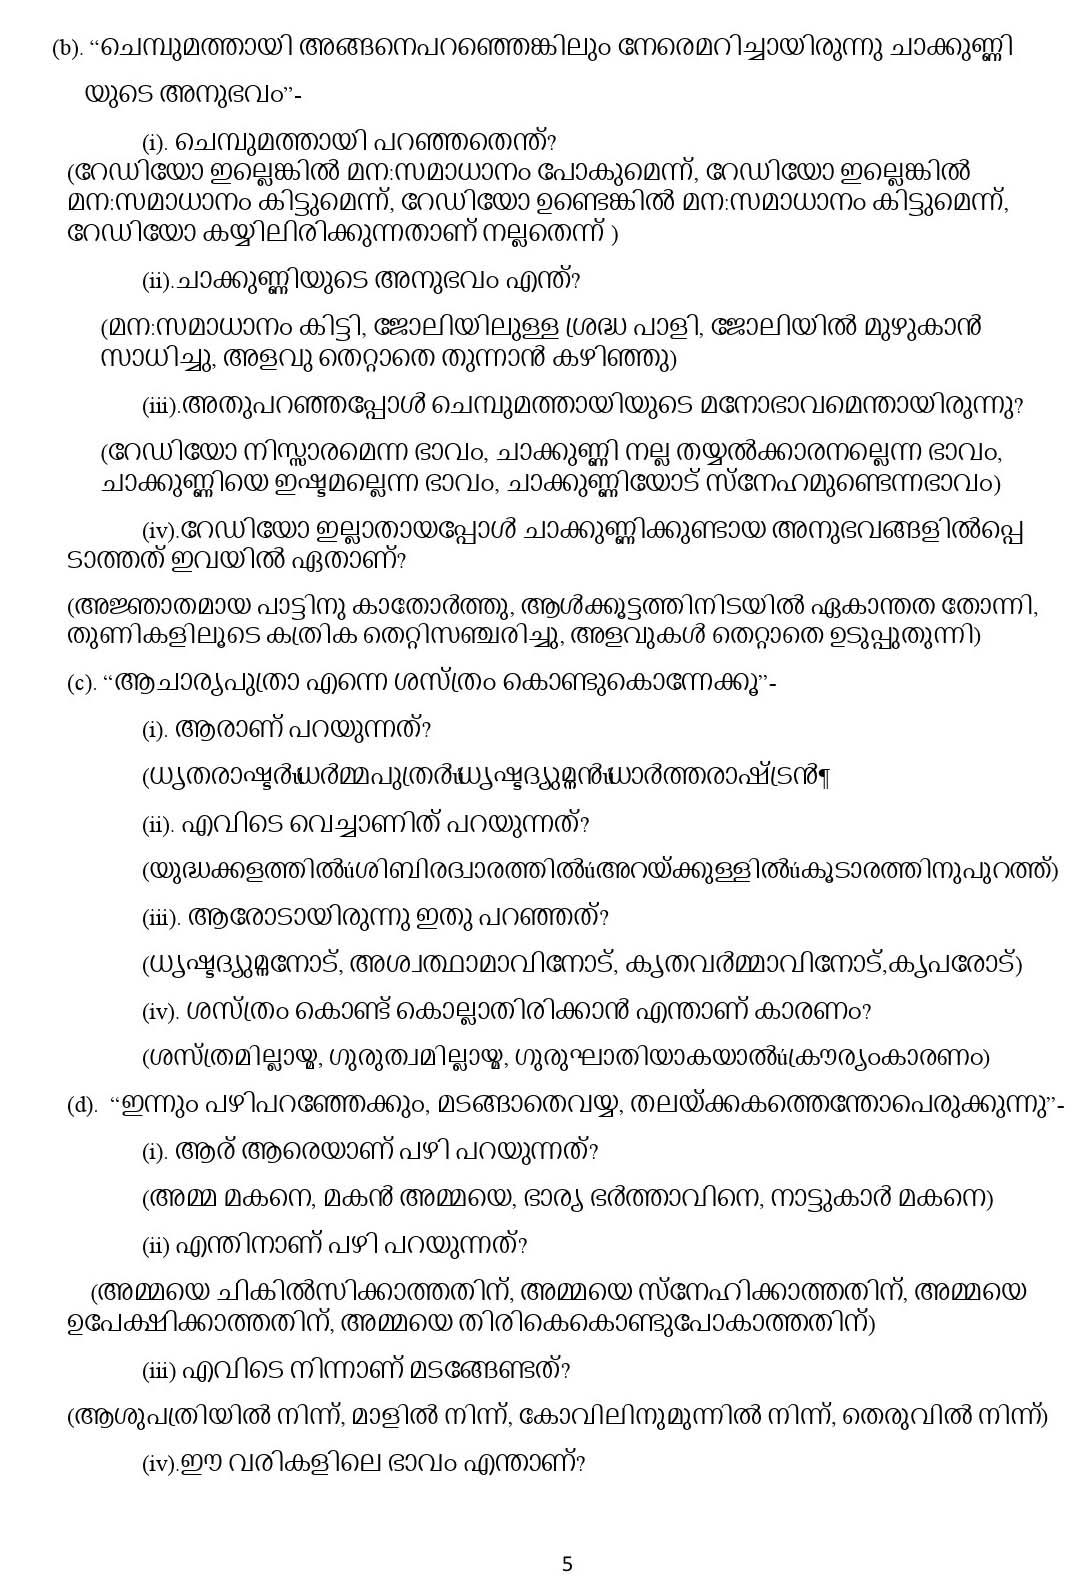 Malayalam CBSE Class X Sample Question Paper 2020 21 - Image 5